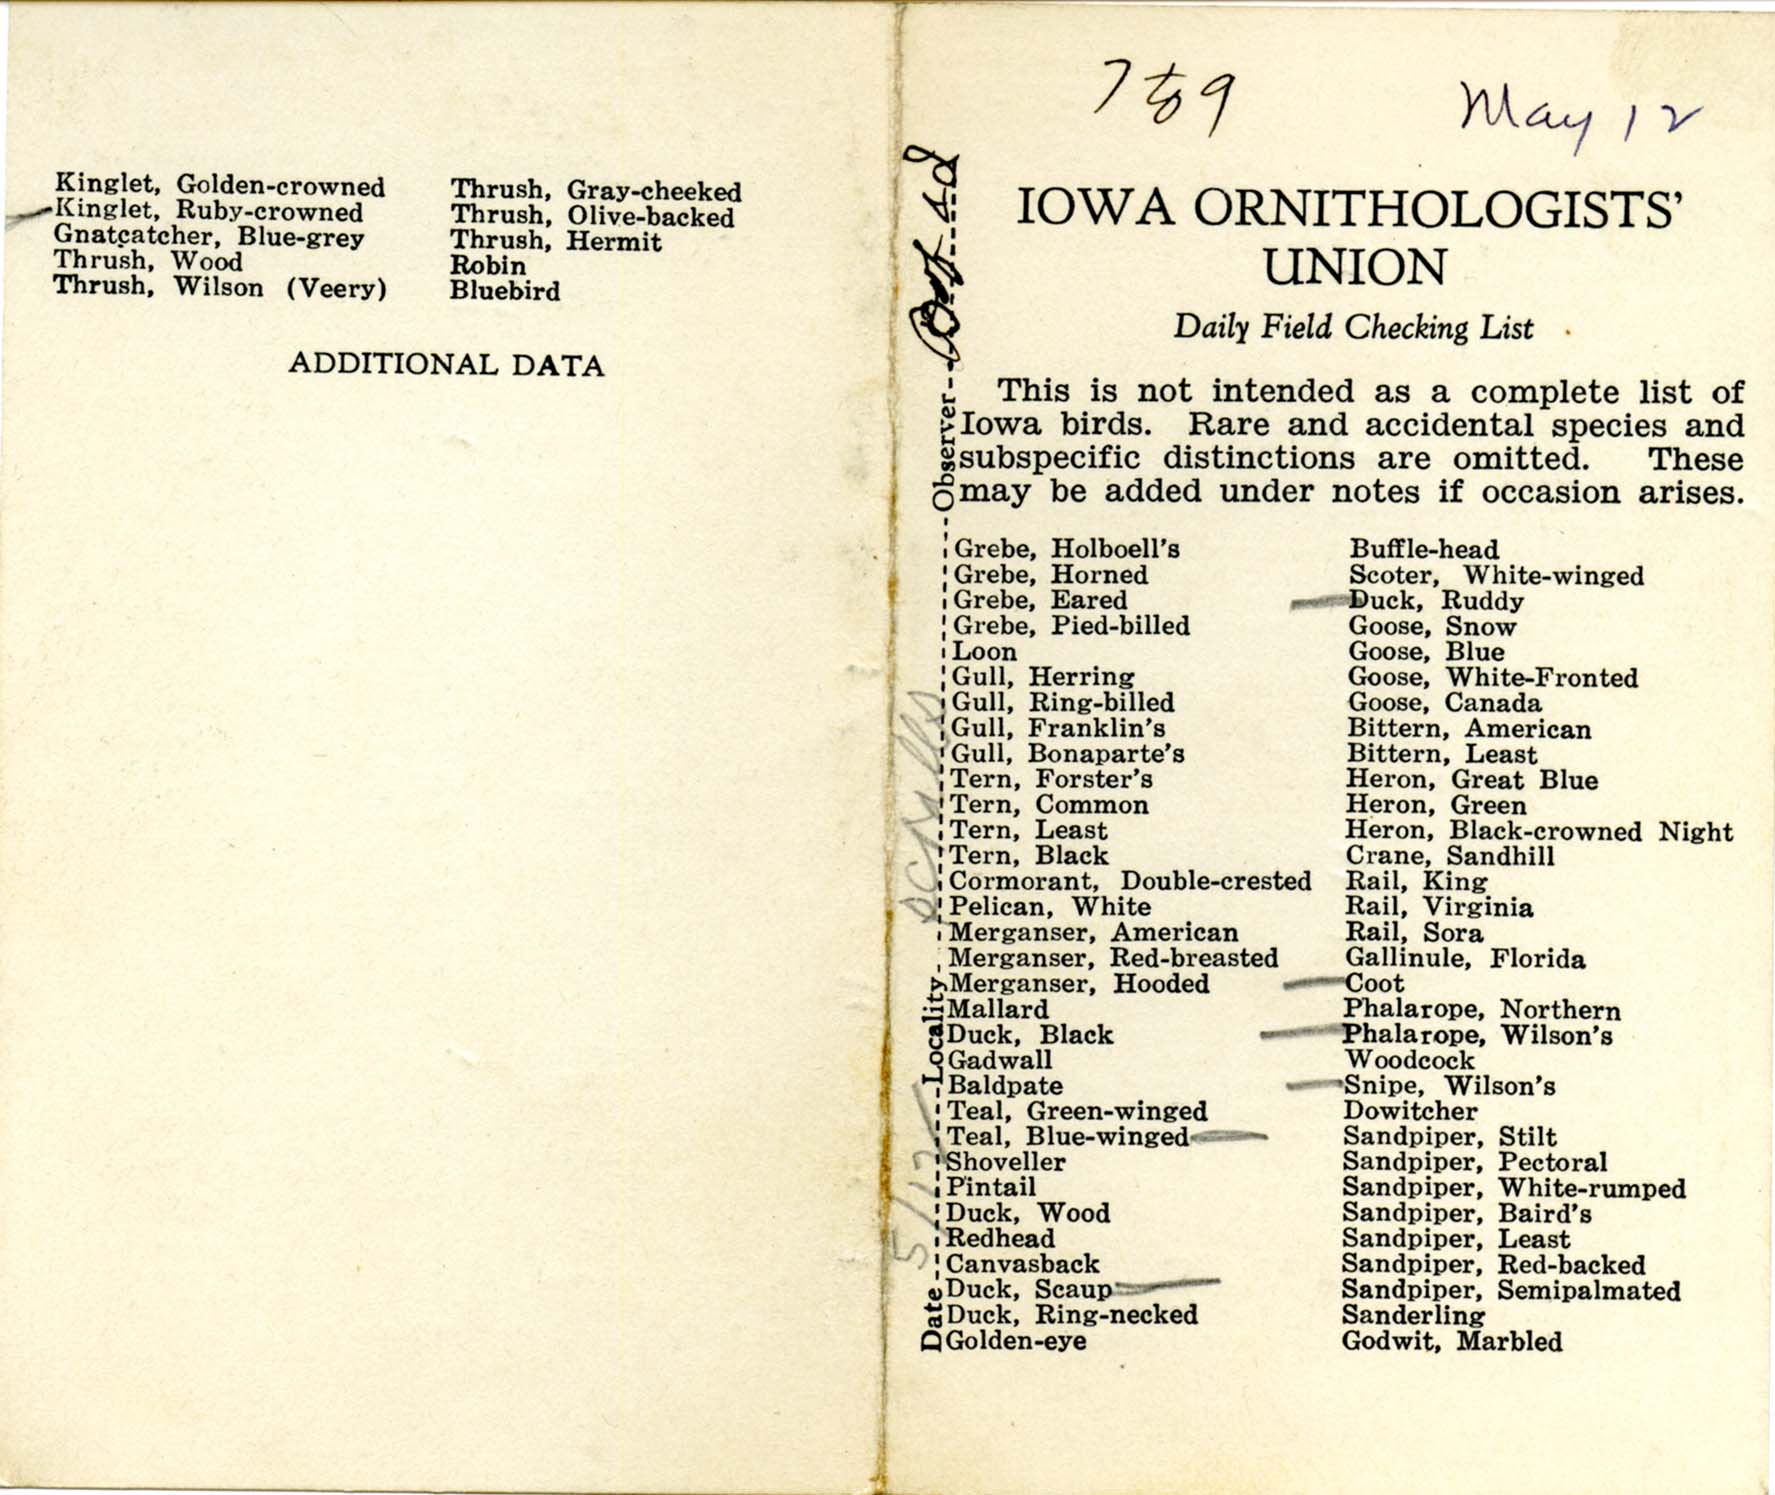 Daily field checking list, Walter Rosene, May 12, 1931